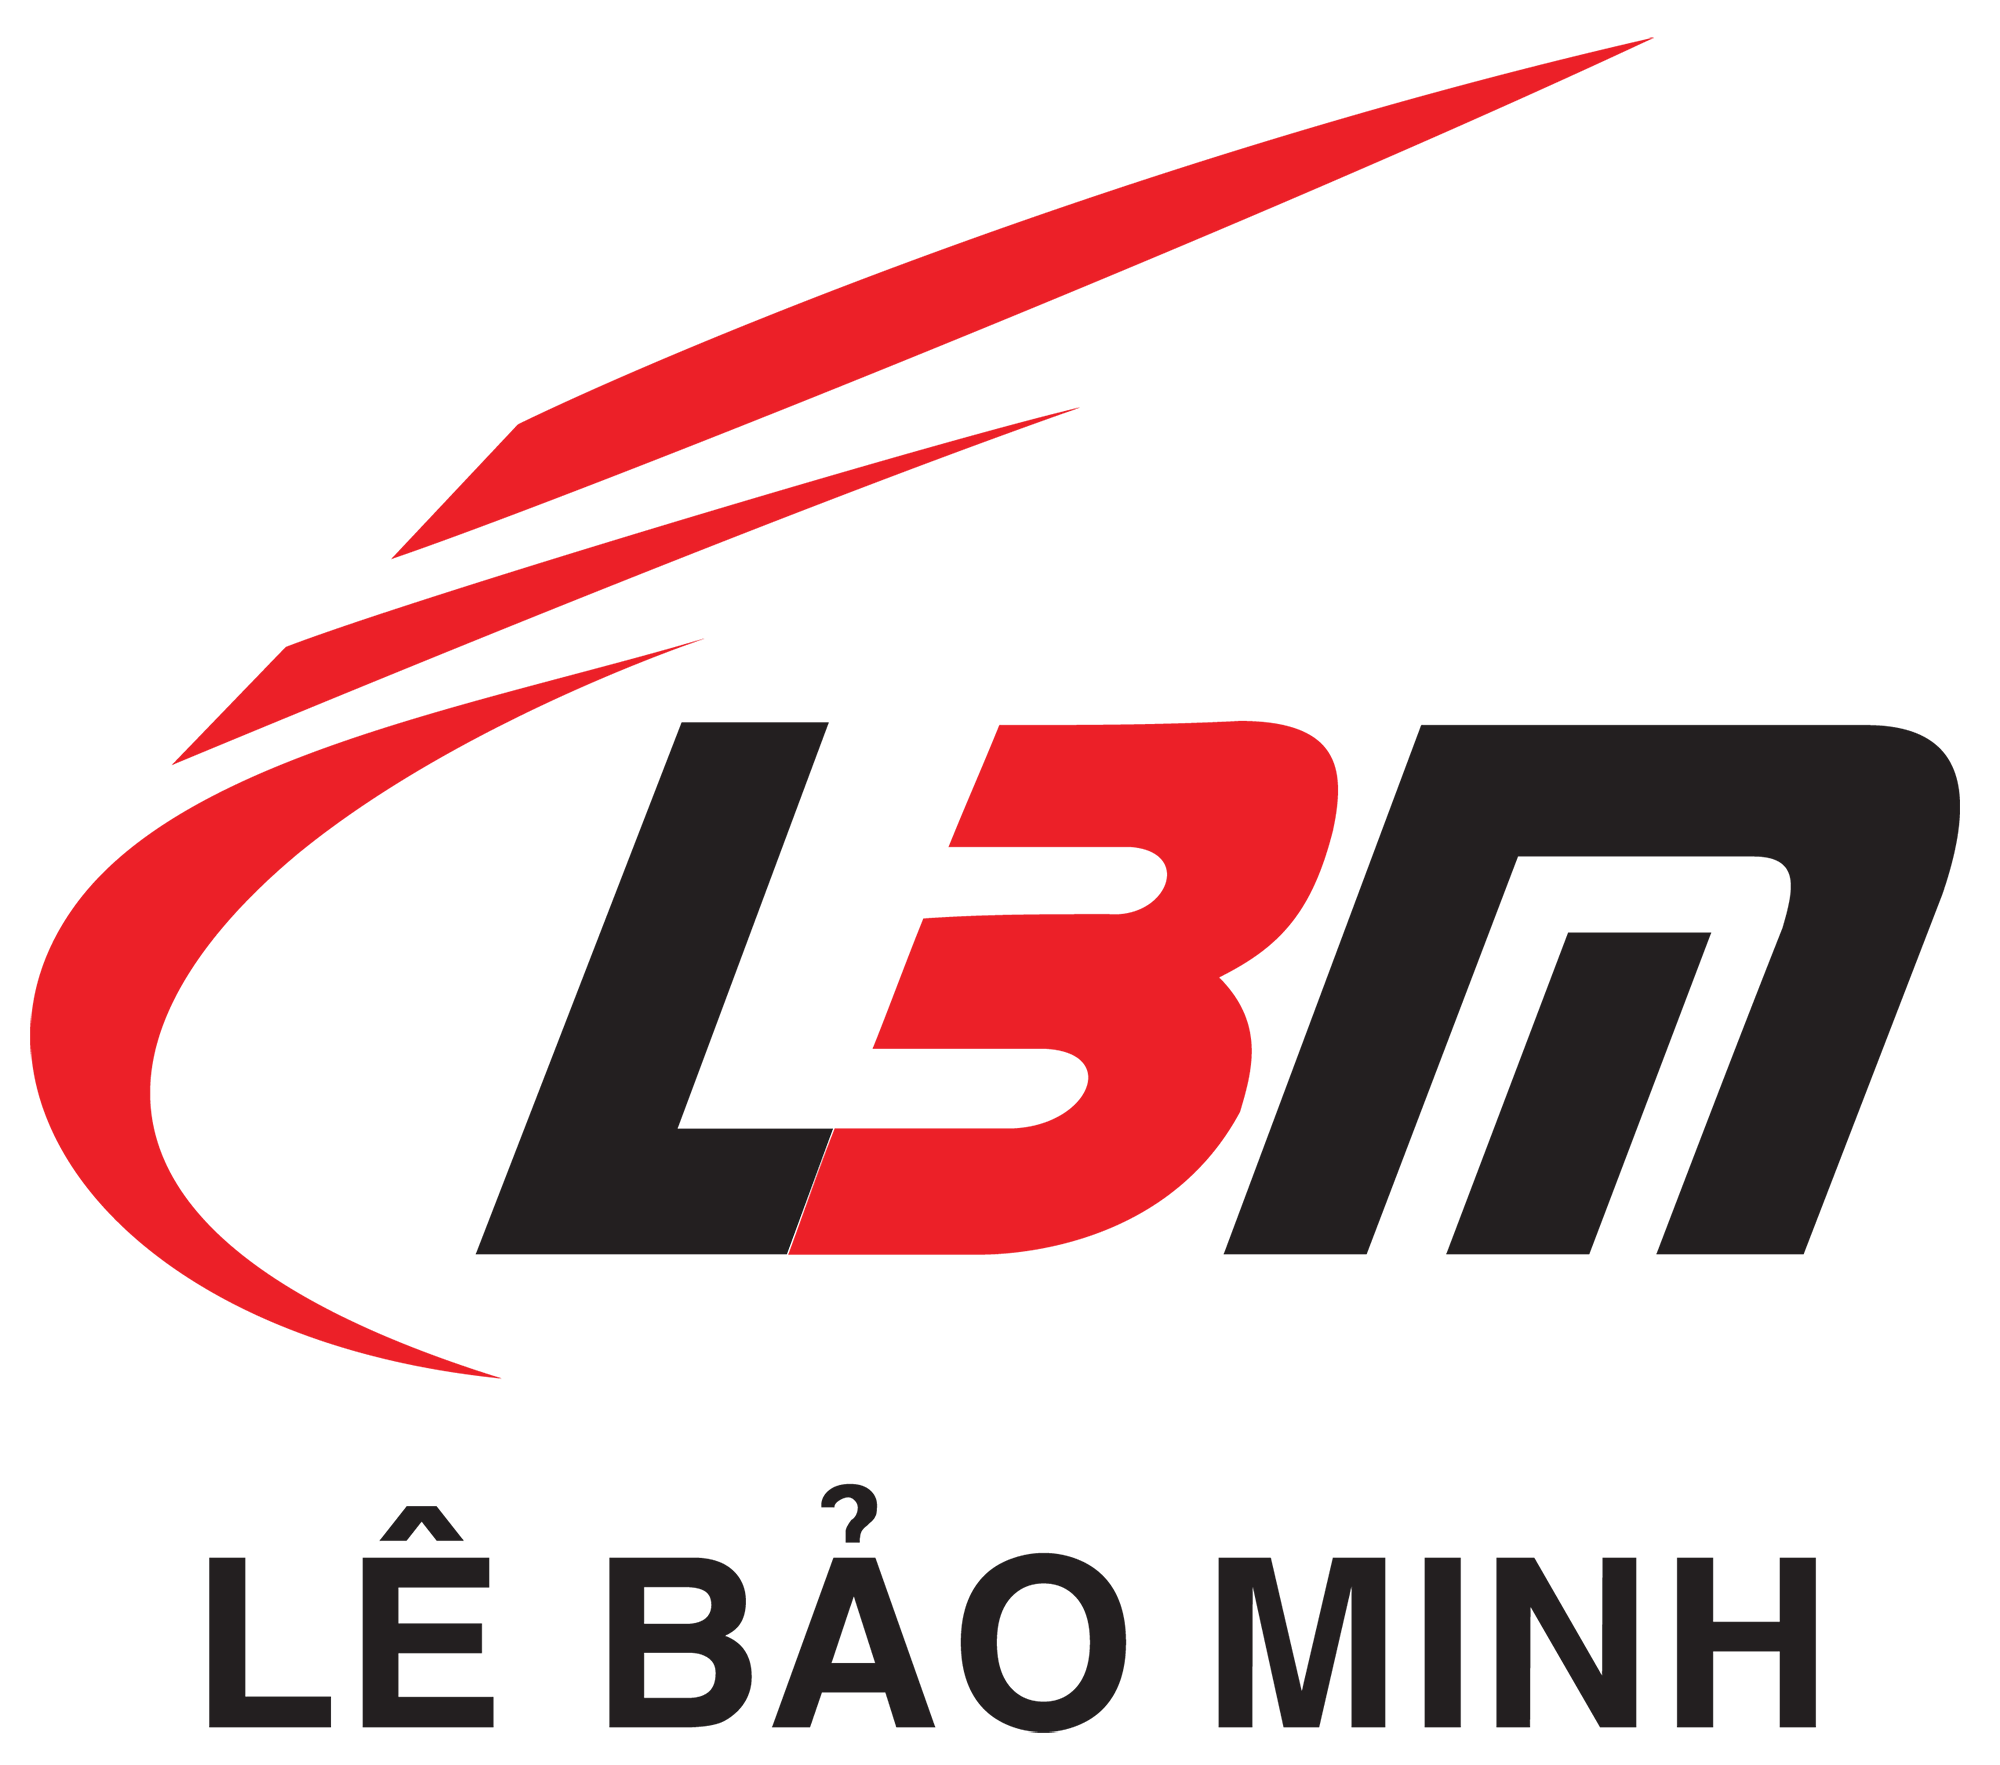  Lê Bảo Minh